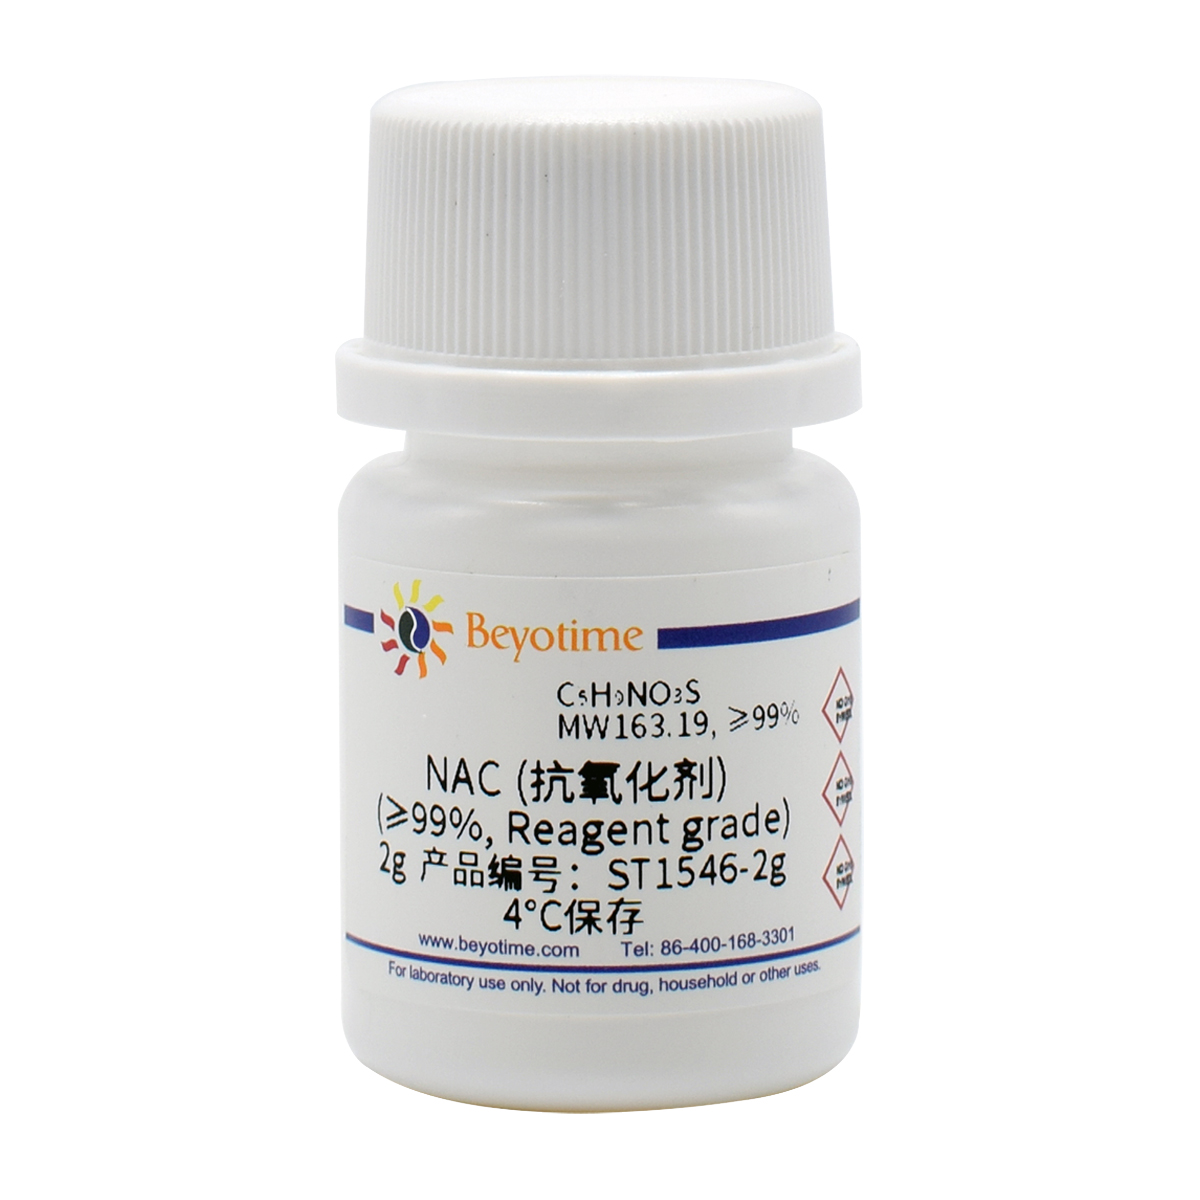 NAC (抗氧化剂) (≥99%, Reagent grade)(ST1546-2g)